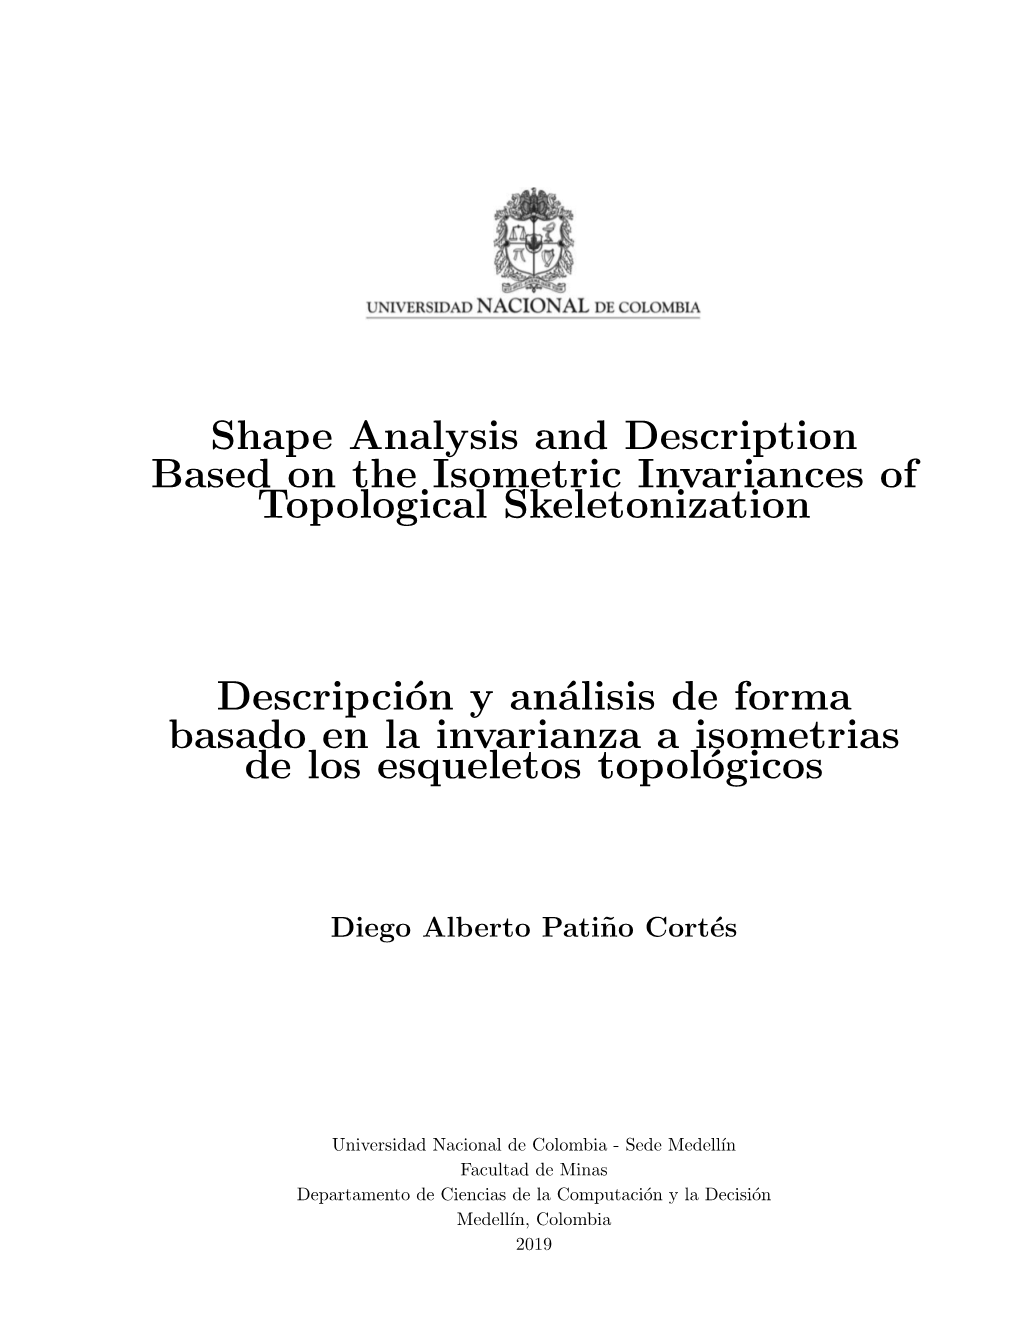 Shape Analysis and Description Based on the Isometric Invariances of Topological Skeletonization